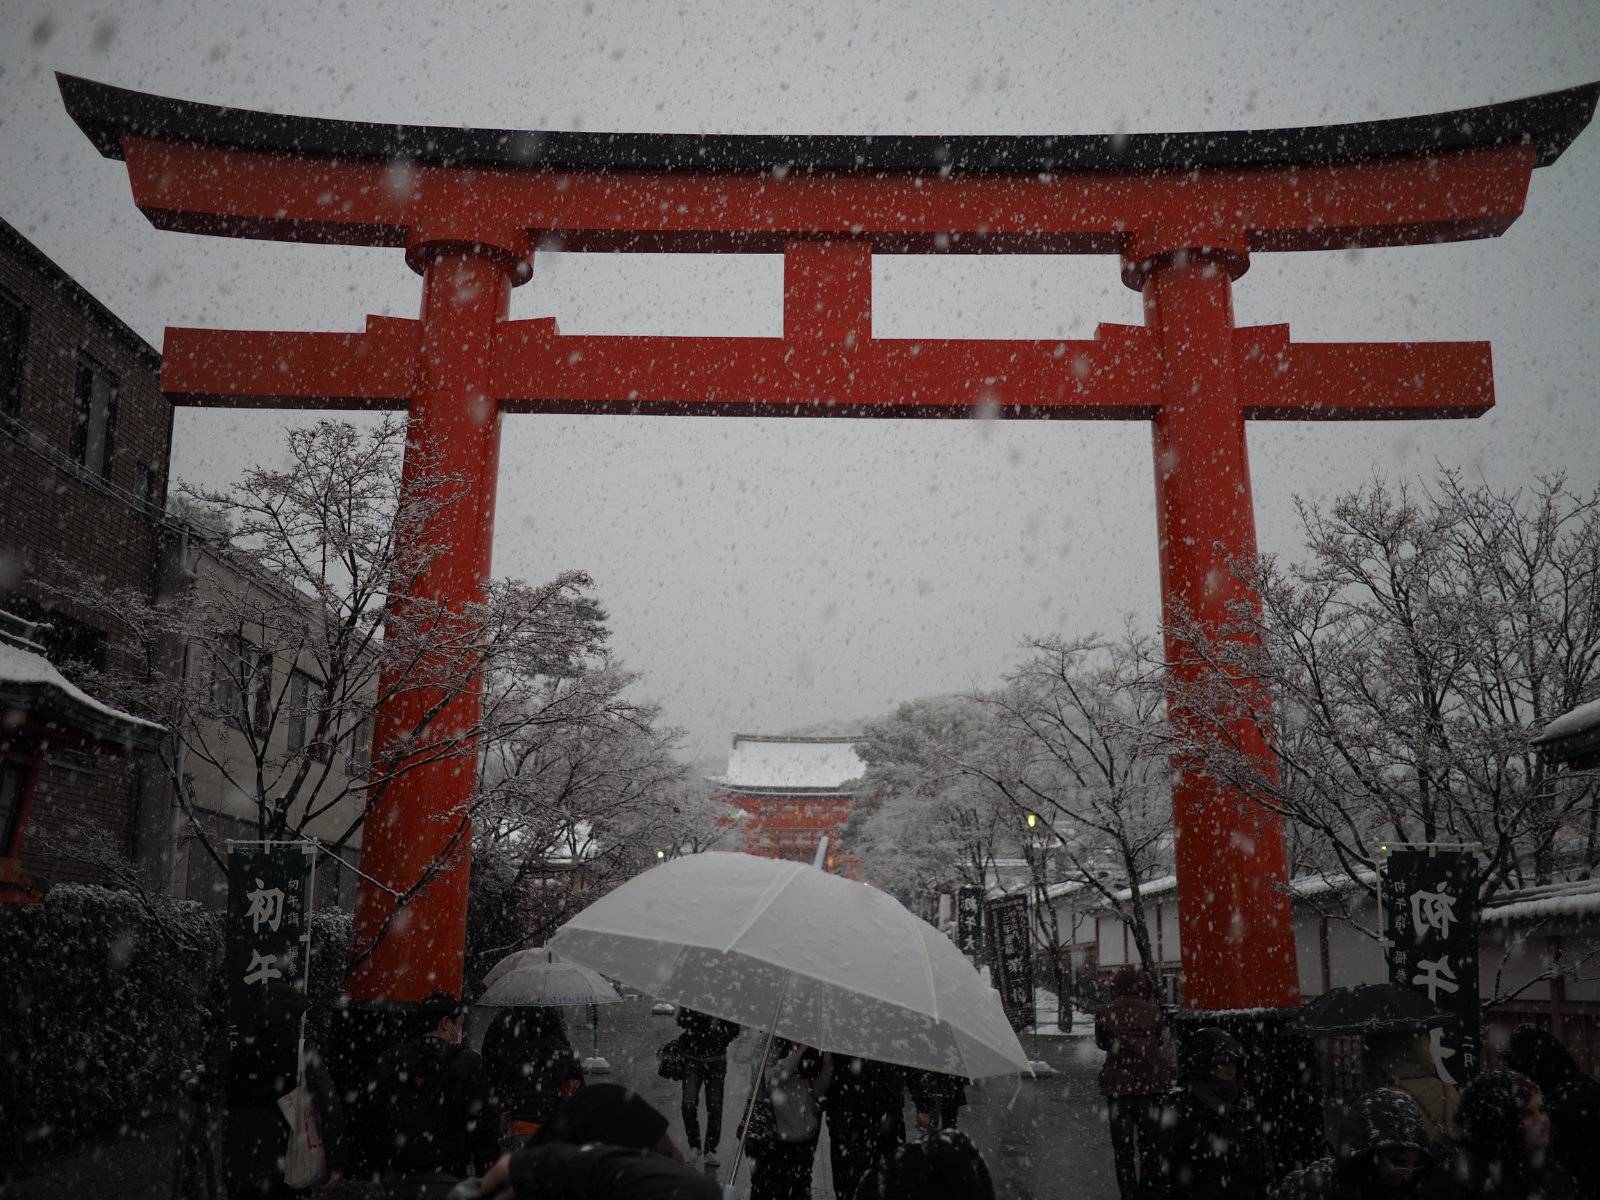 Entrance gate to Fushimi Inari